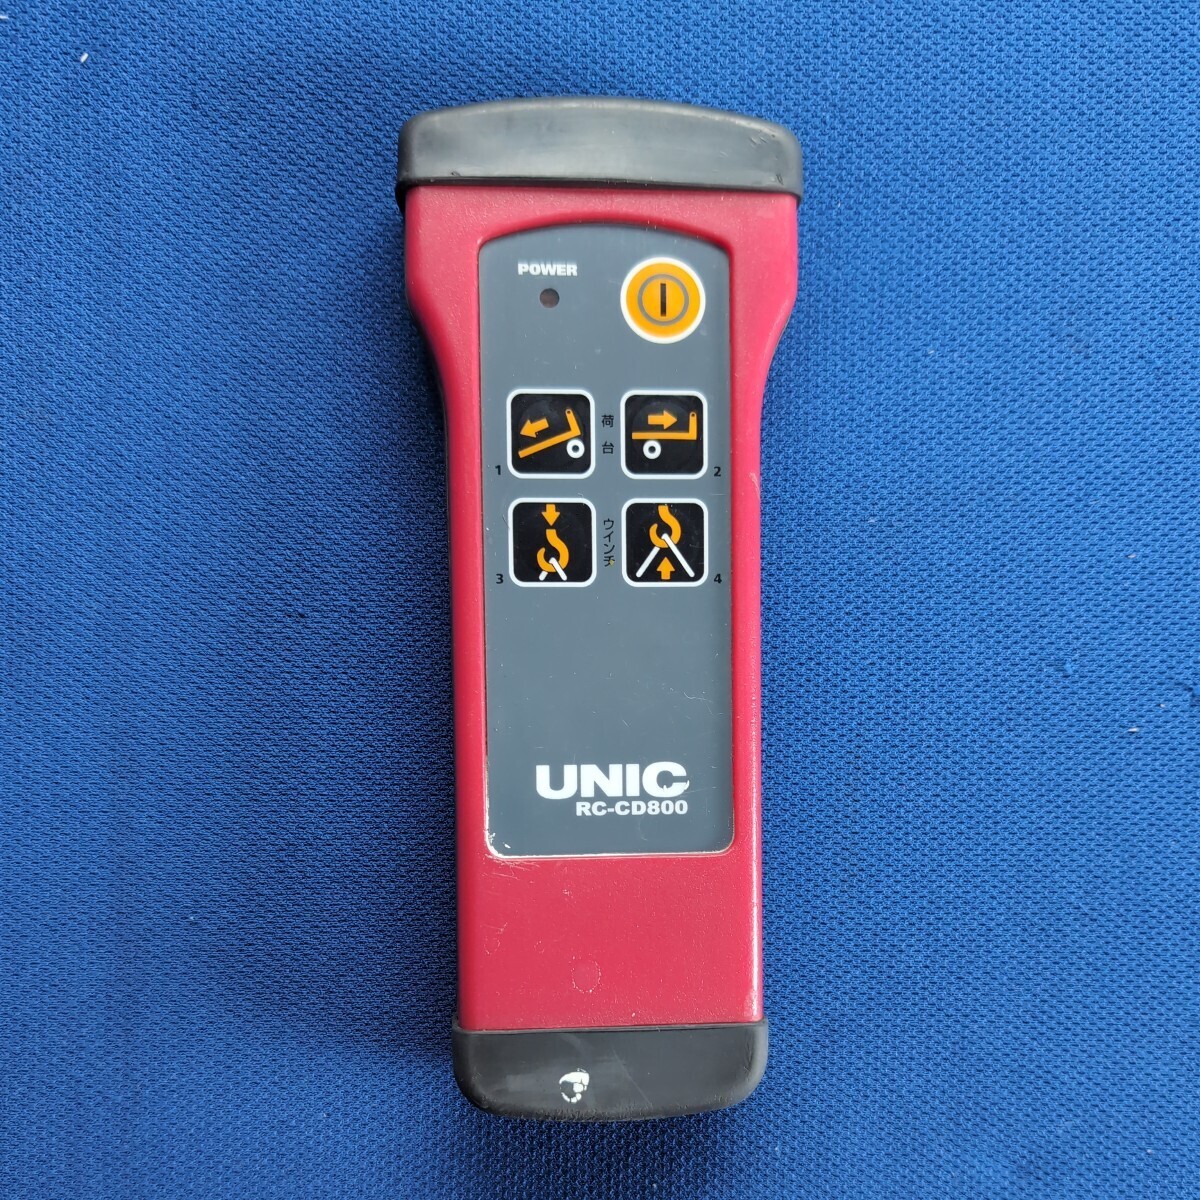  дистанционный пульт UNIC loading car Furukawa Unic радиоконтроллер радиопередатчик Unic радиоконтроллер 